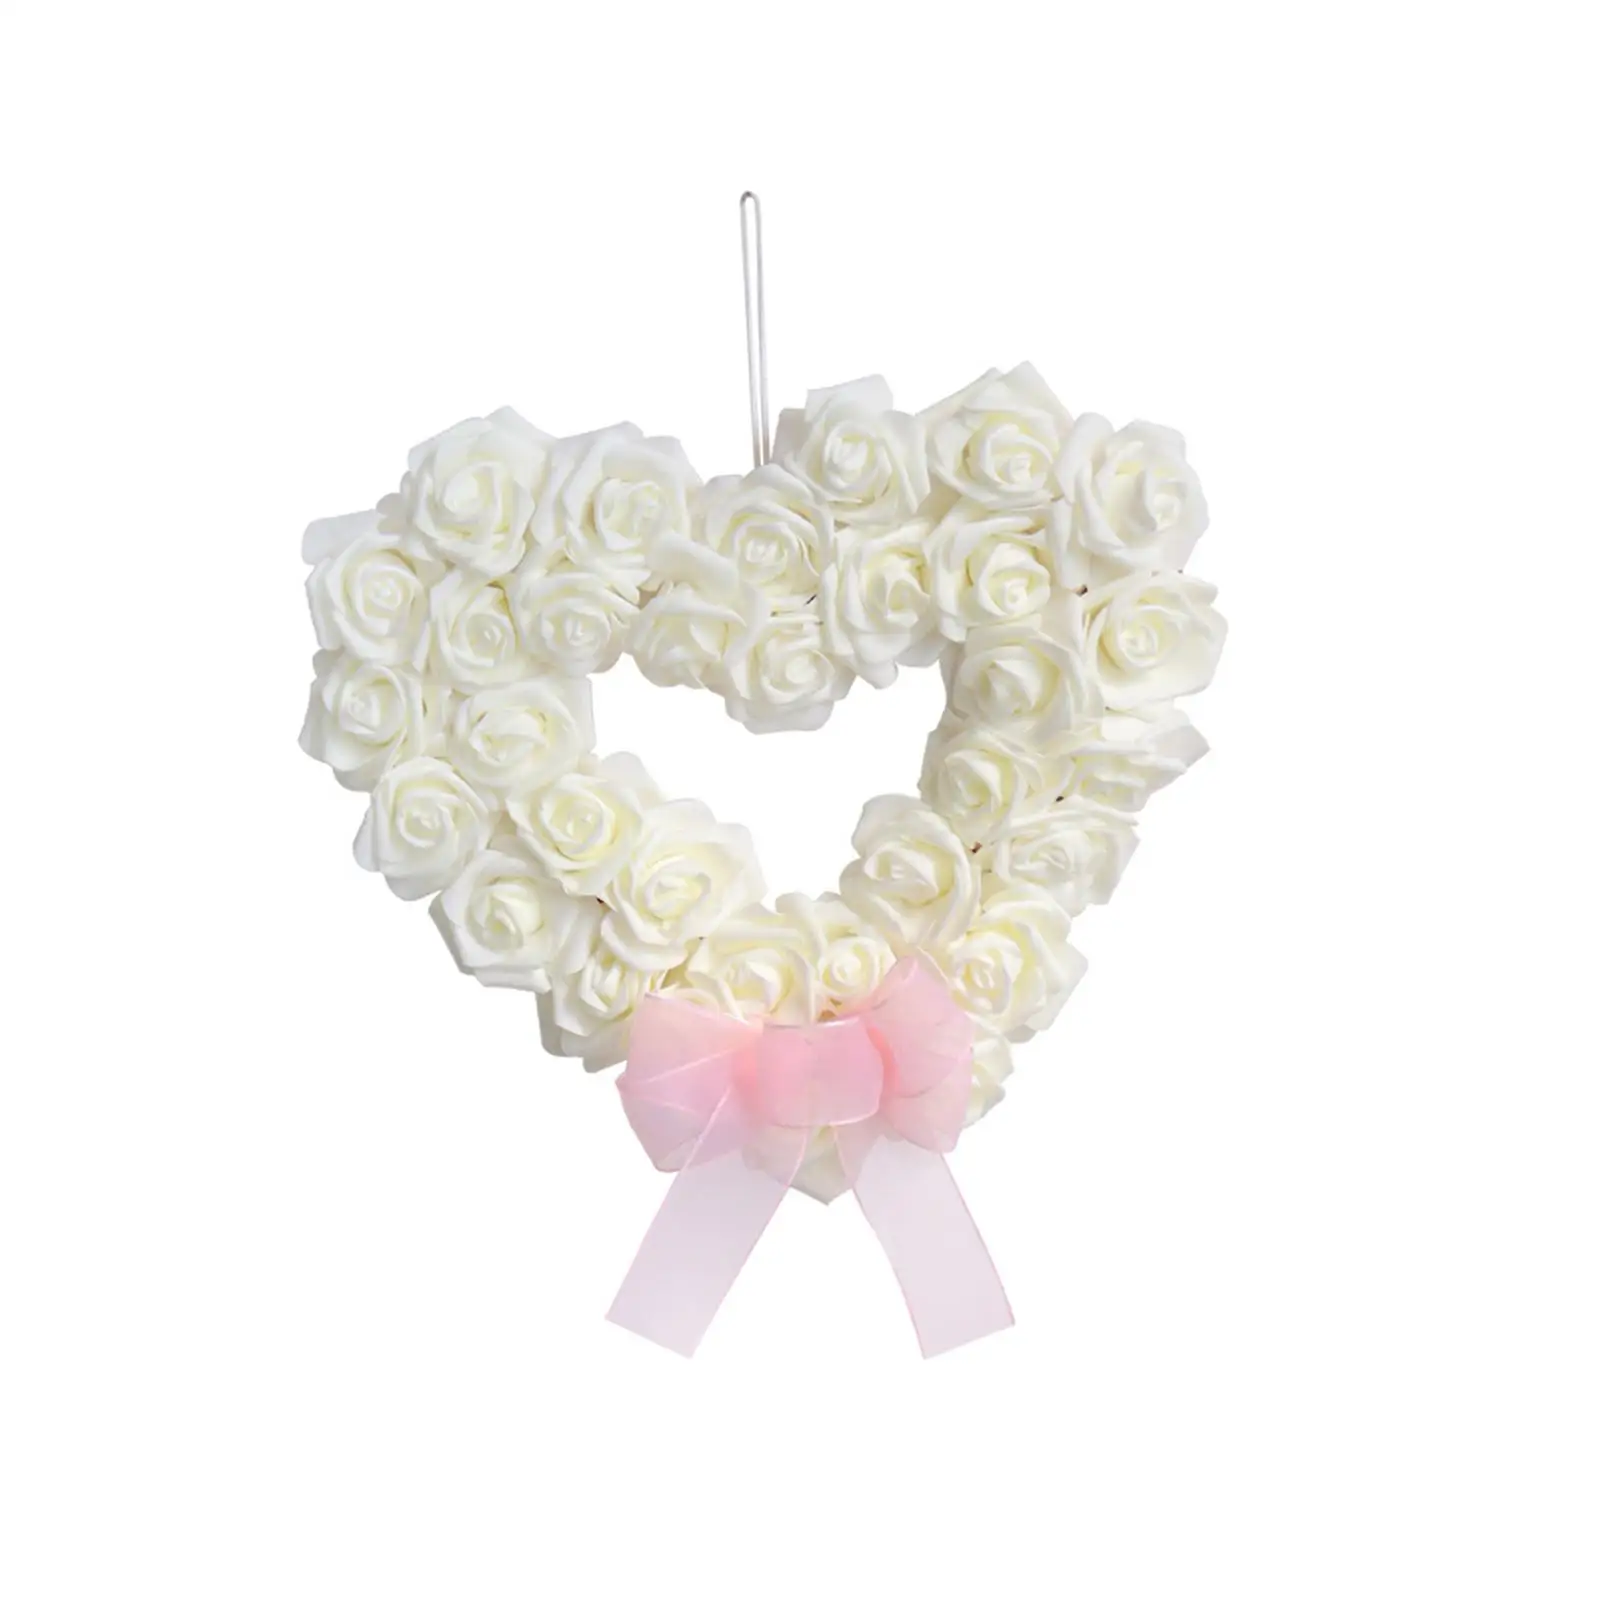 Heart Shaped Artificial Wreath /Decorative White Rose Flower Wreaths/ Artificial Garland for Wedding/ Garden Background Home